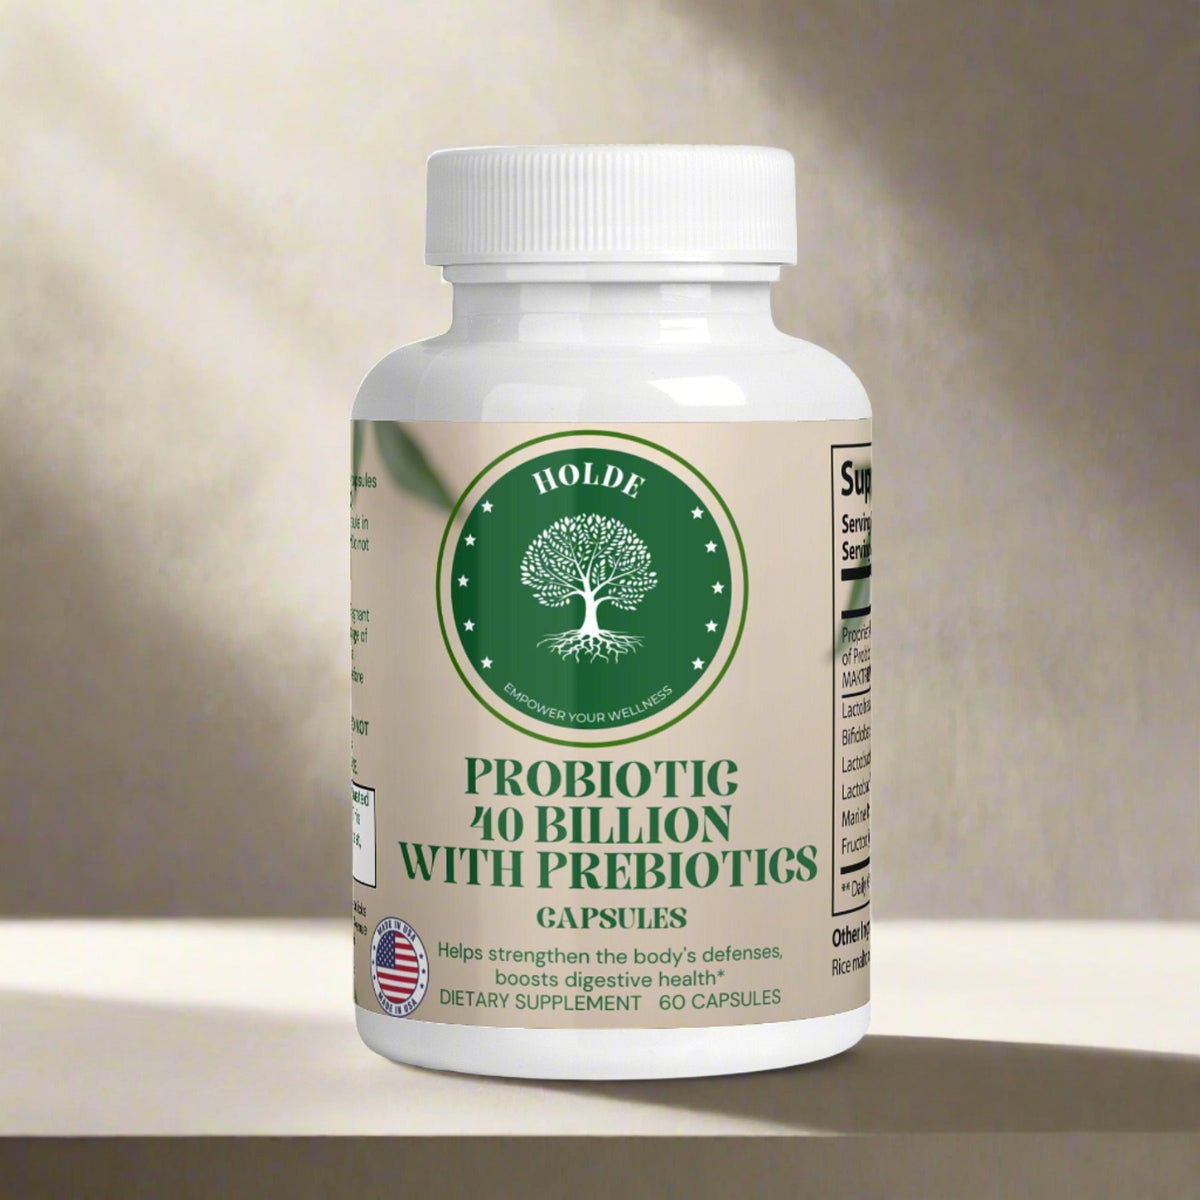 Probiotic 40 Billion with Prebiotics - HOLDE